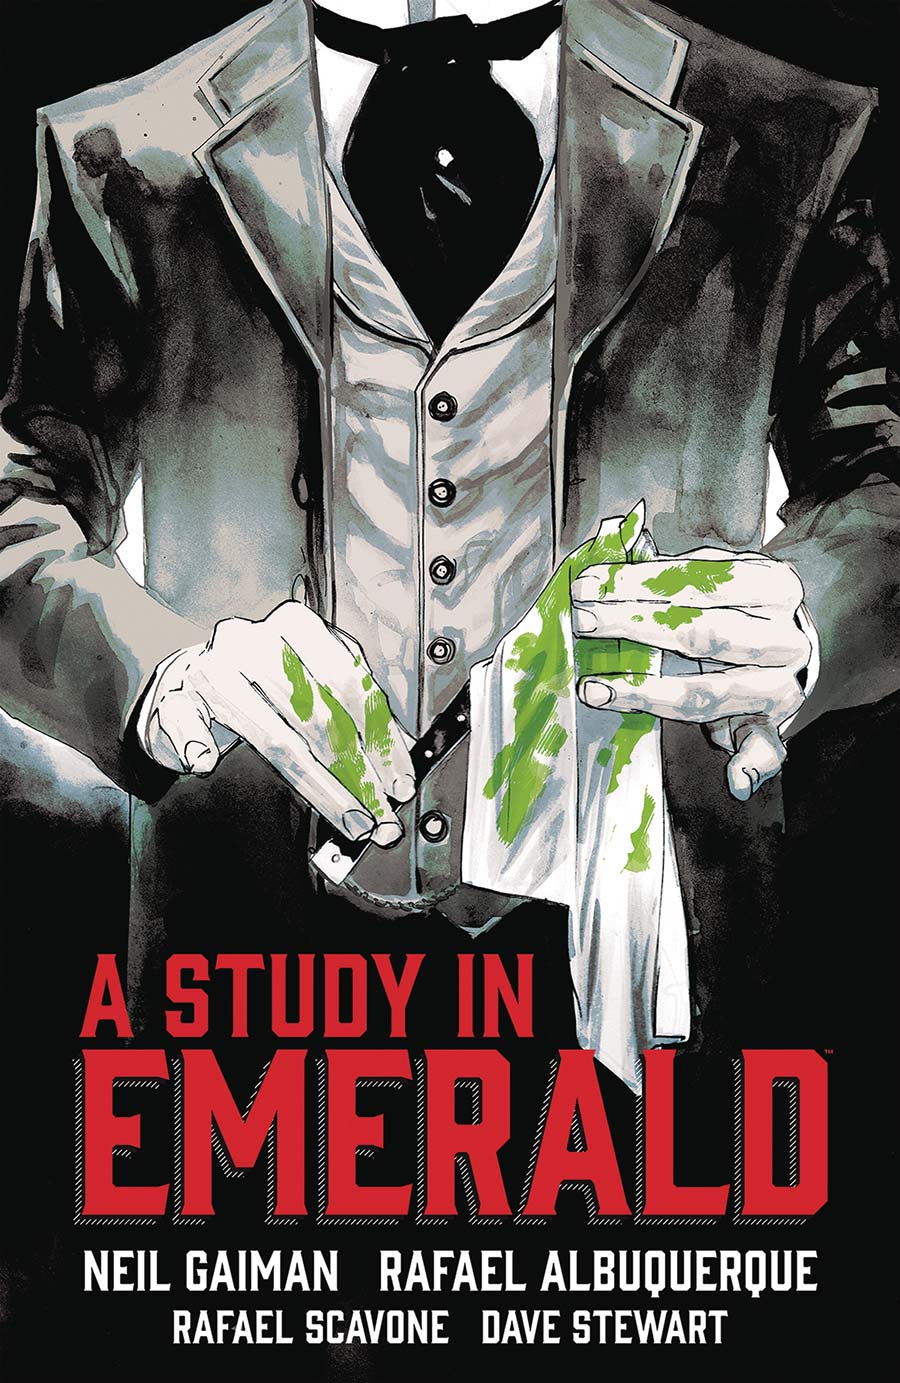 Neil Gaiman’s A Study In Emerald